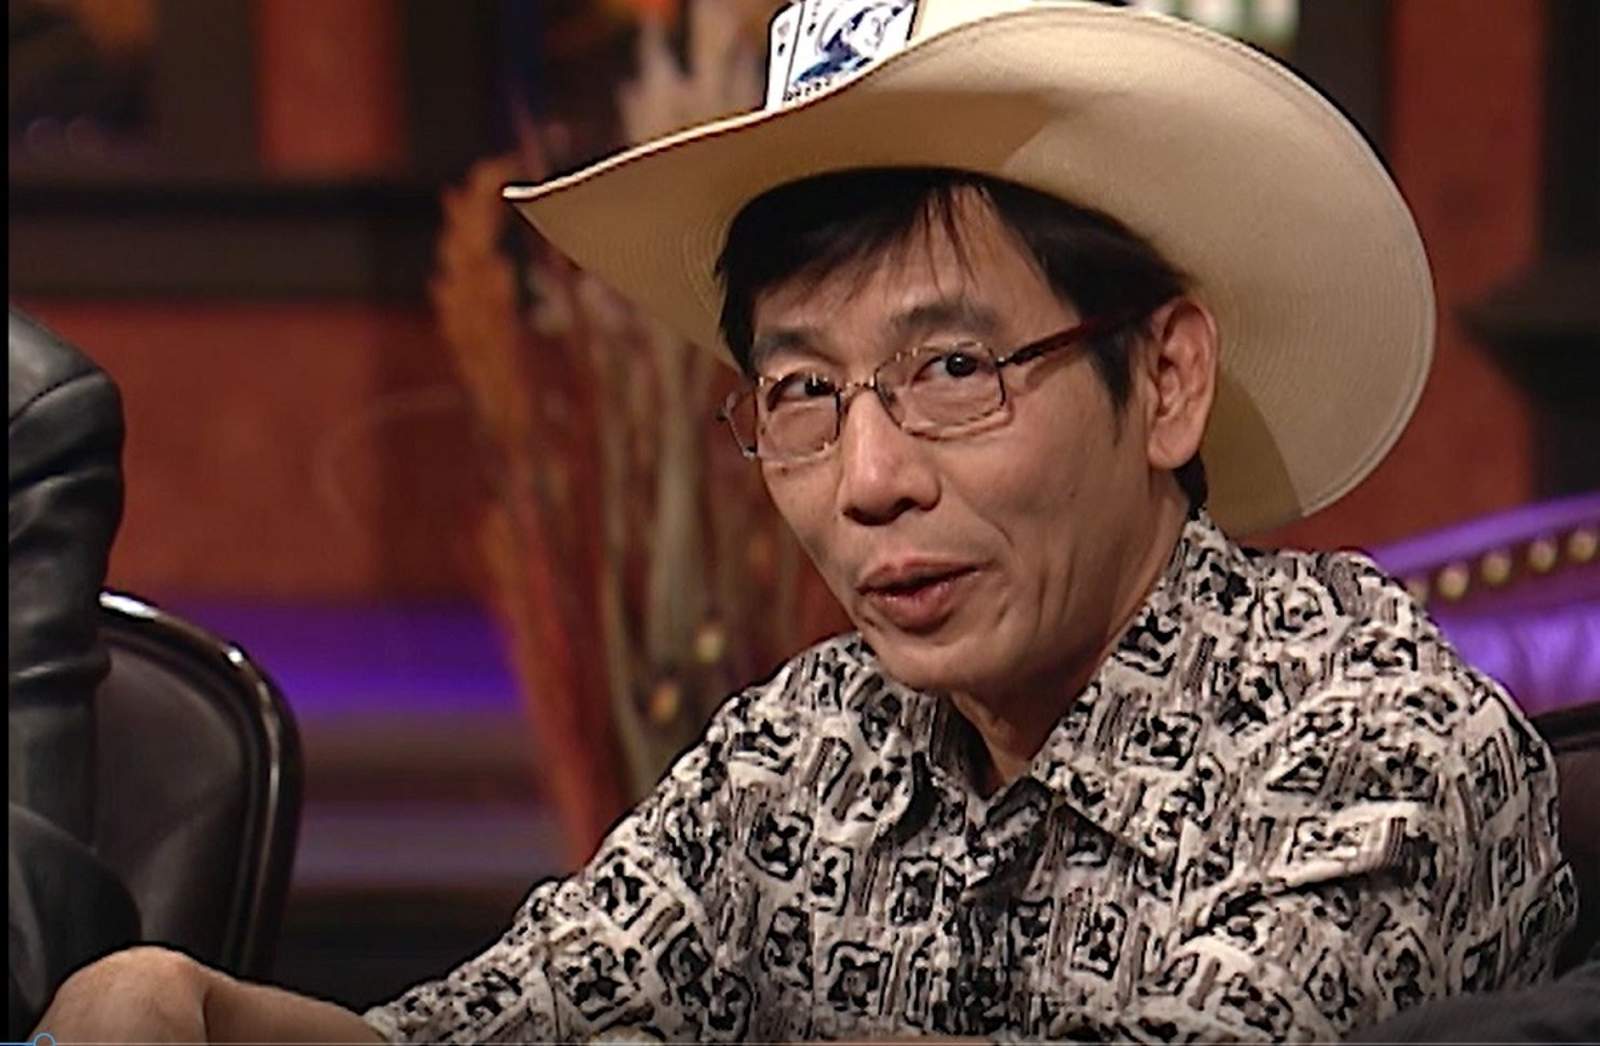 Poker After Dark: Cowboys (Hats) Full